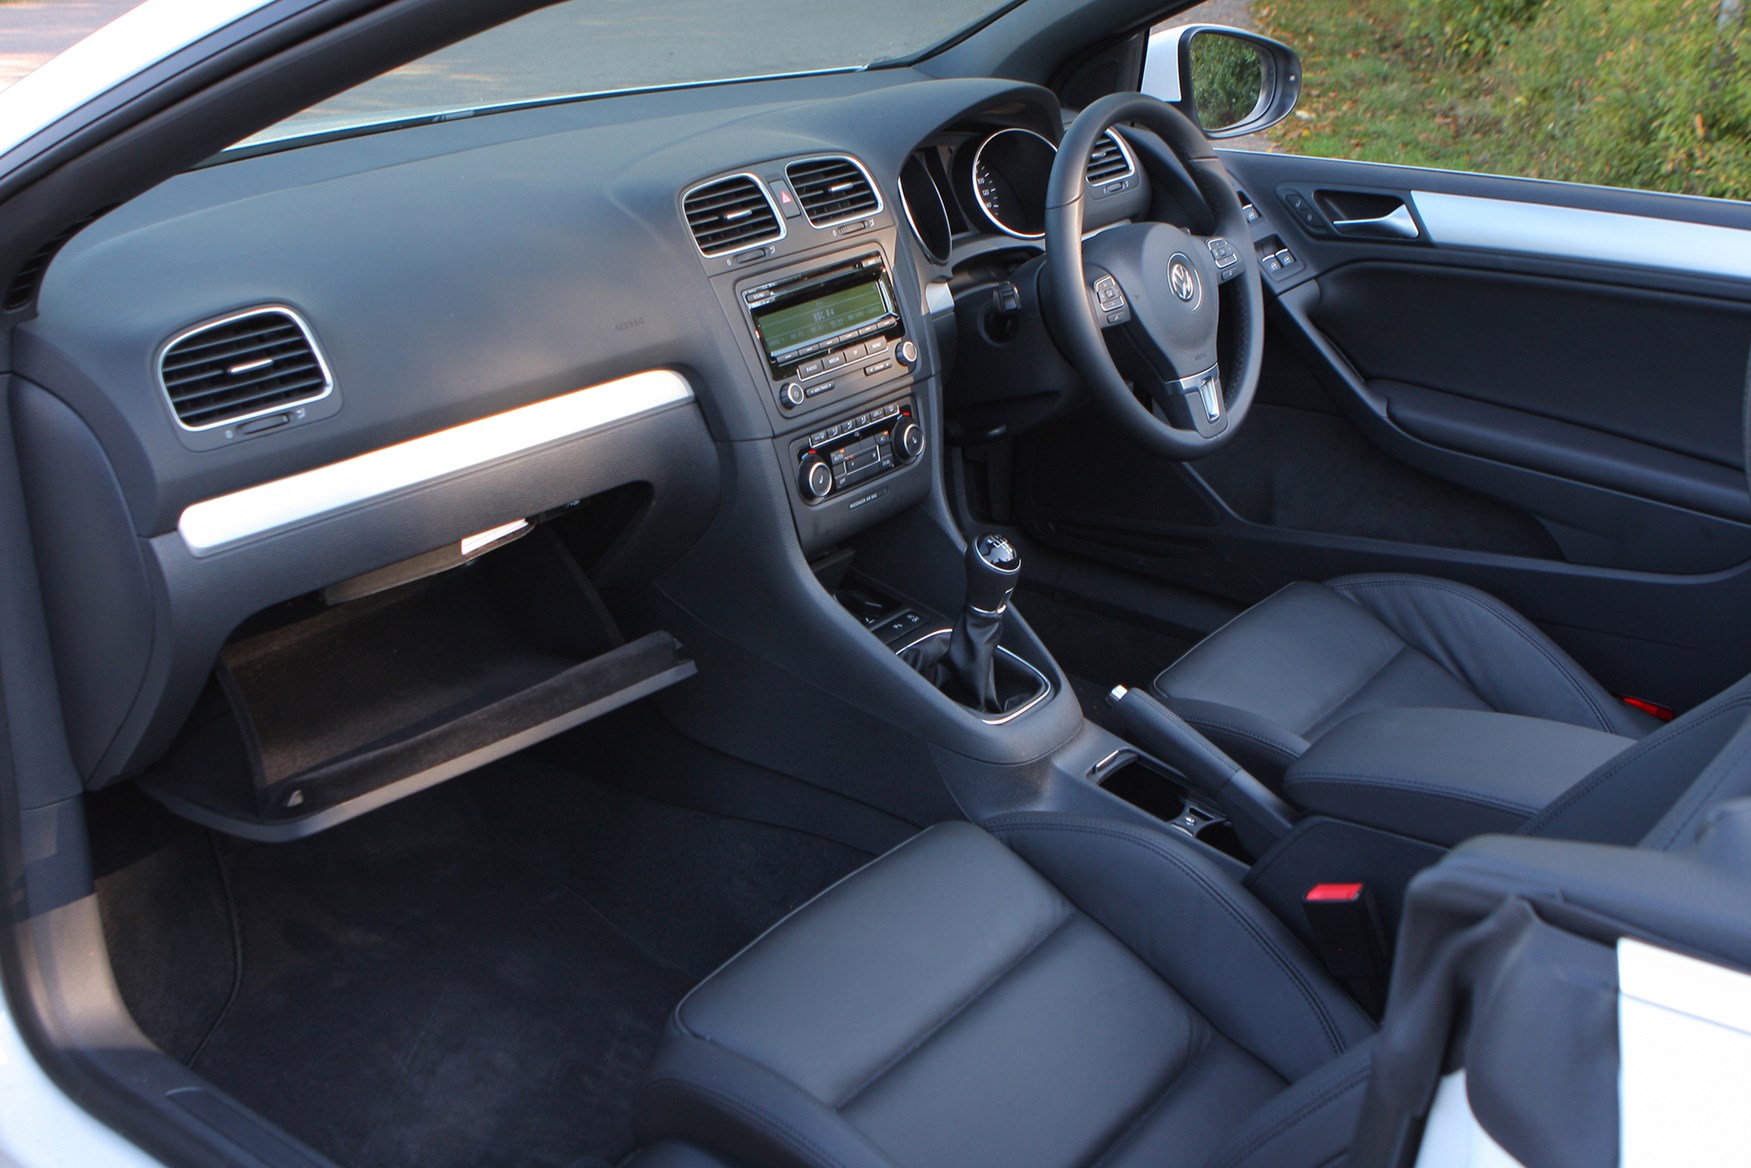 Volkswagen Golf Cabriolet interior